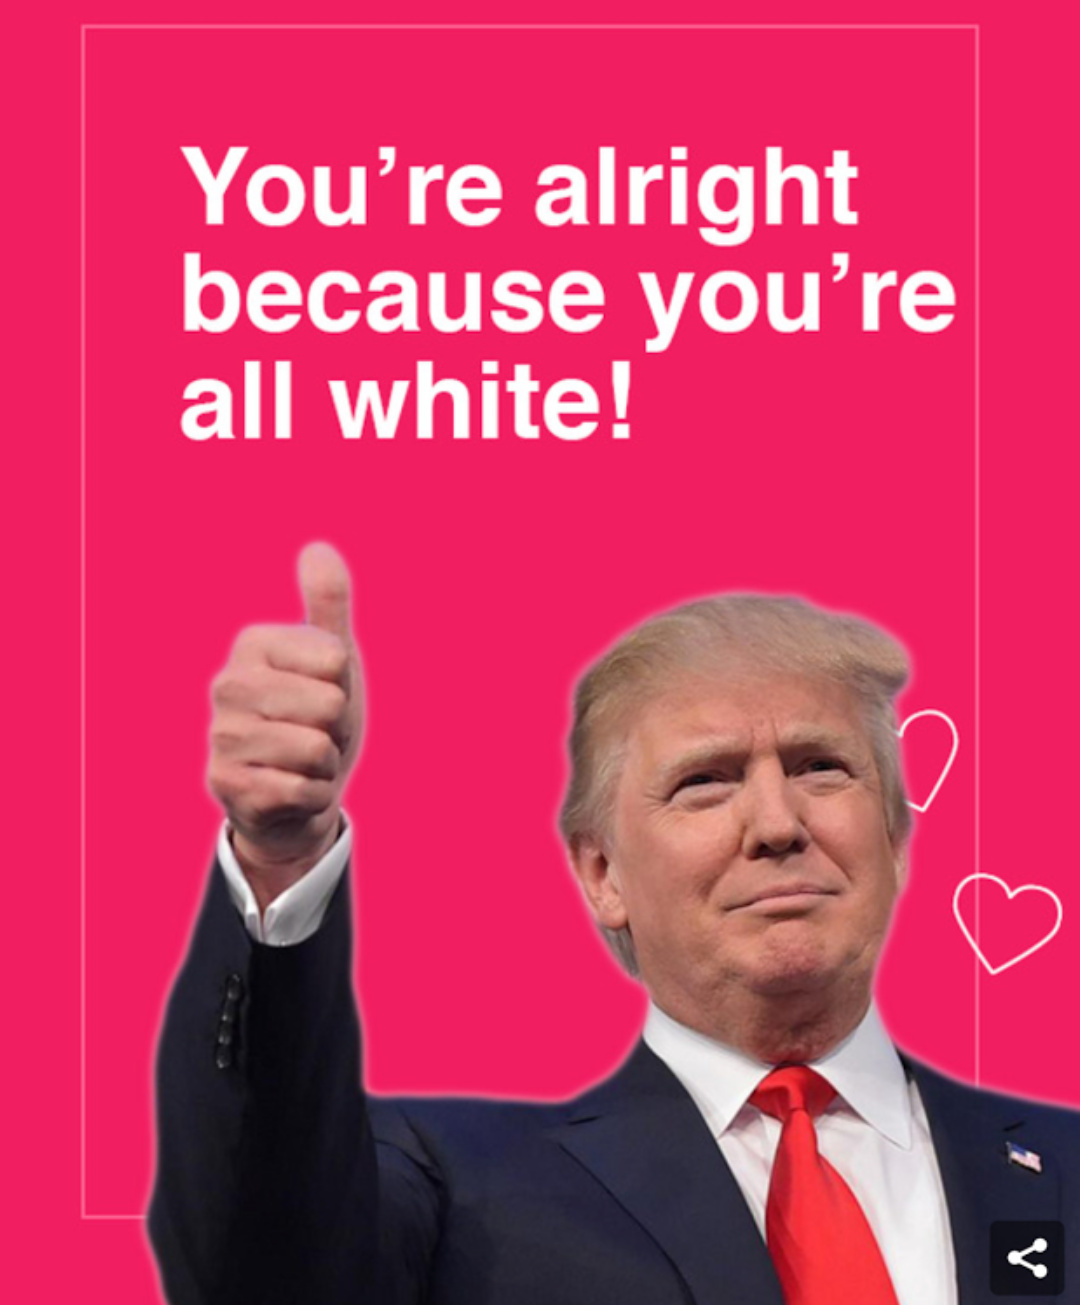 This Valentine Card works - meme